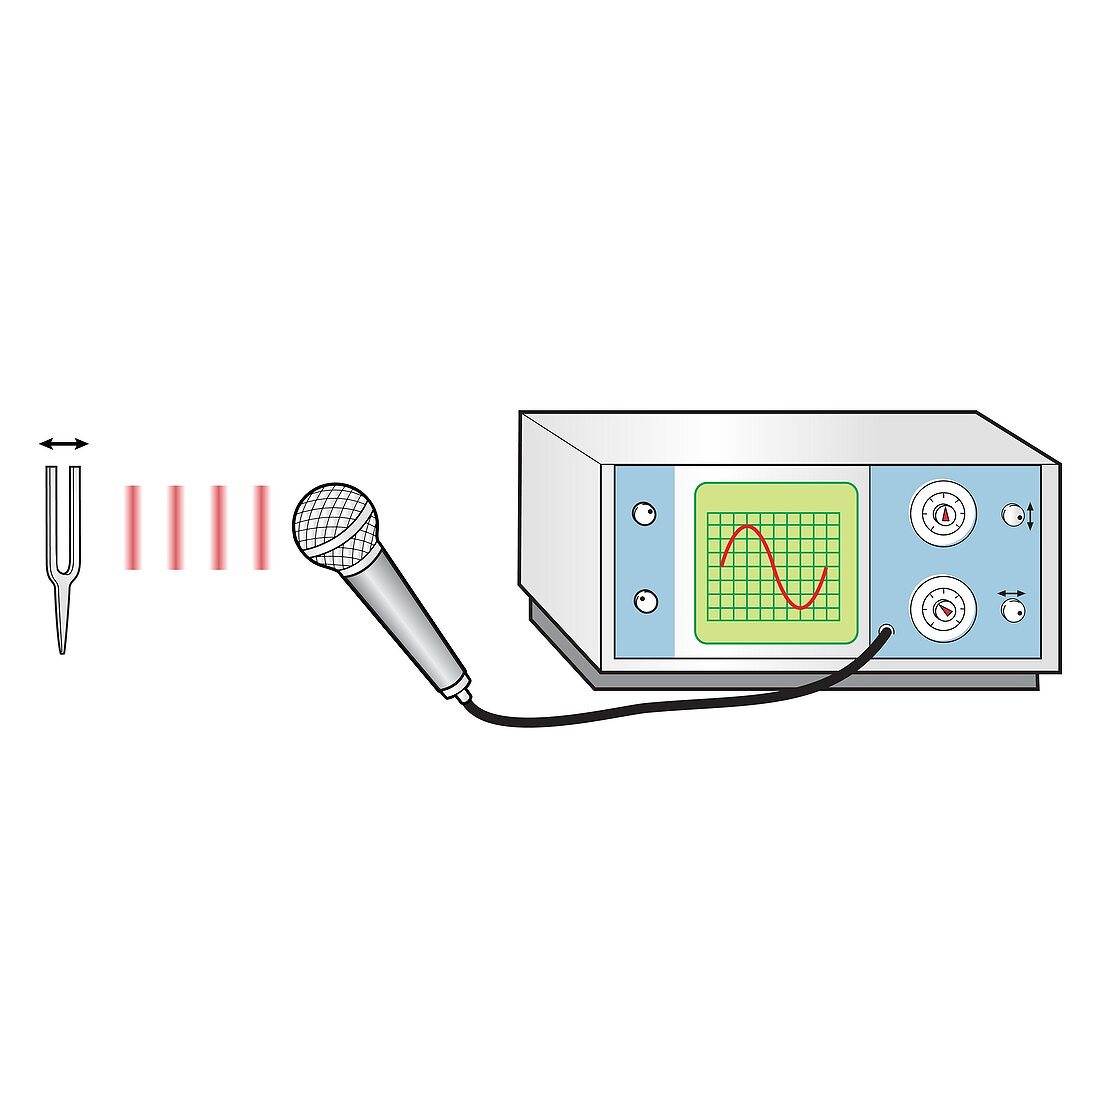 Oscilloscope displaying sound wave signal, illustration